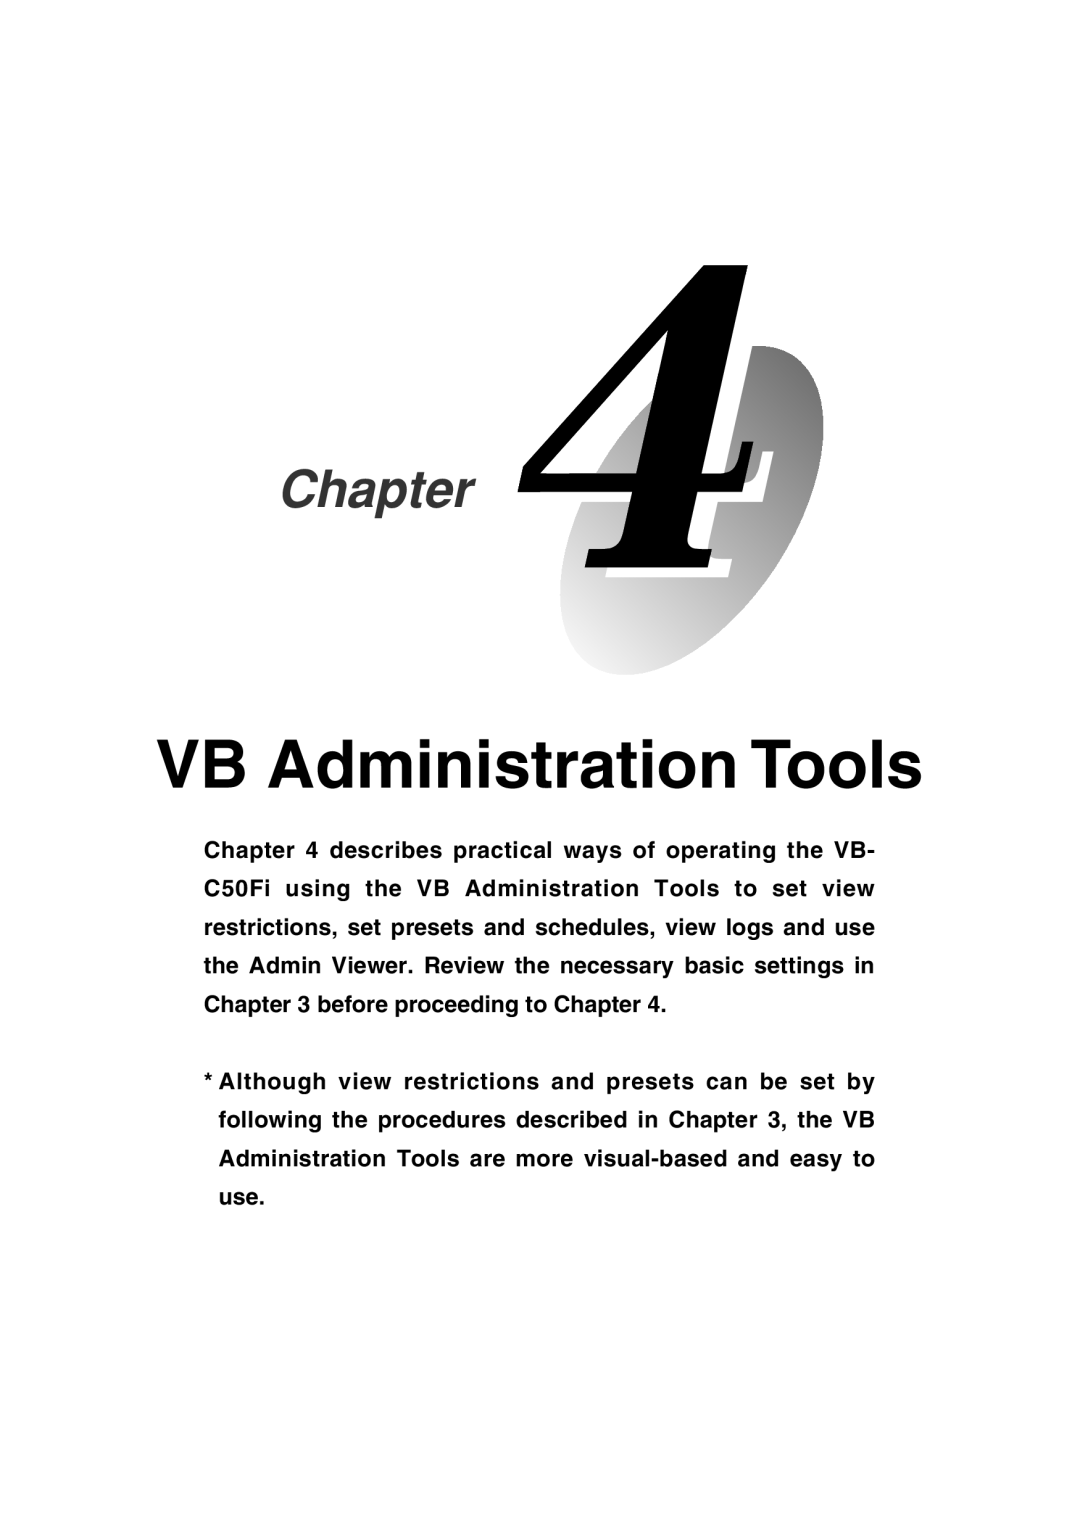 Canon Vb-C50fi user manual VB Administration Tools, Chapter 